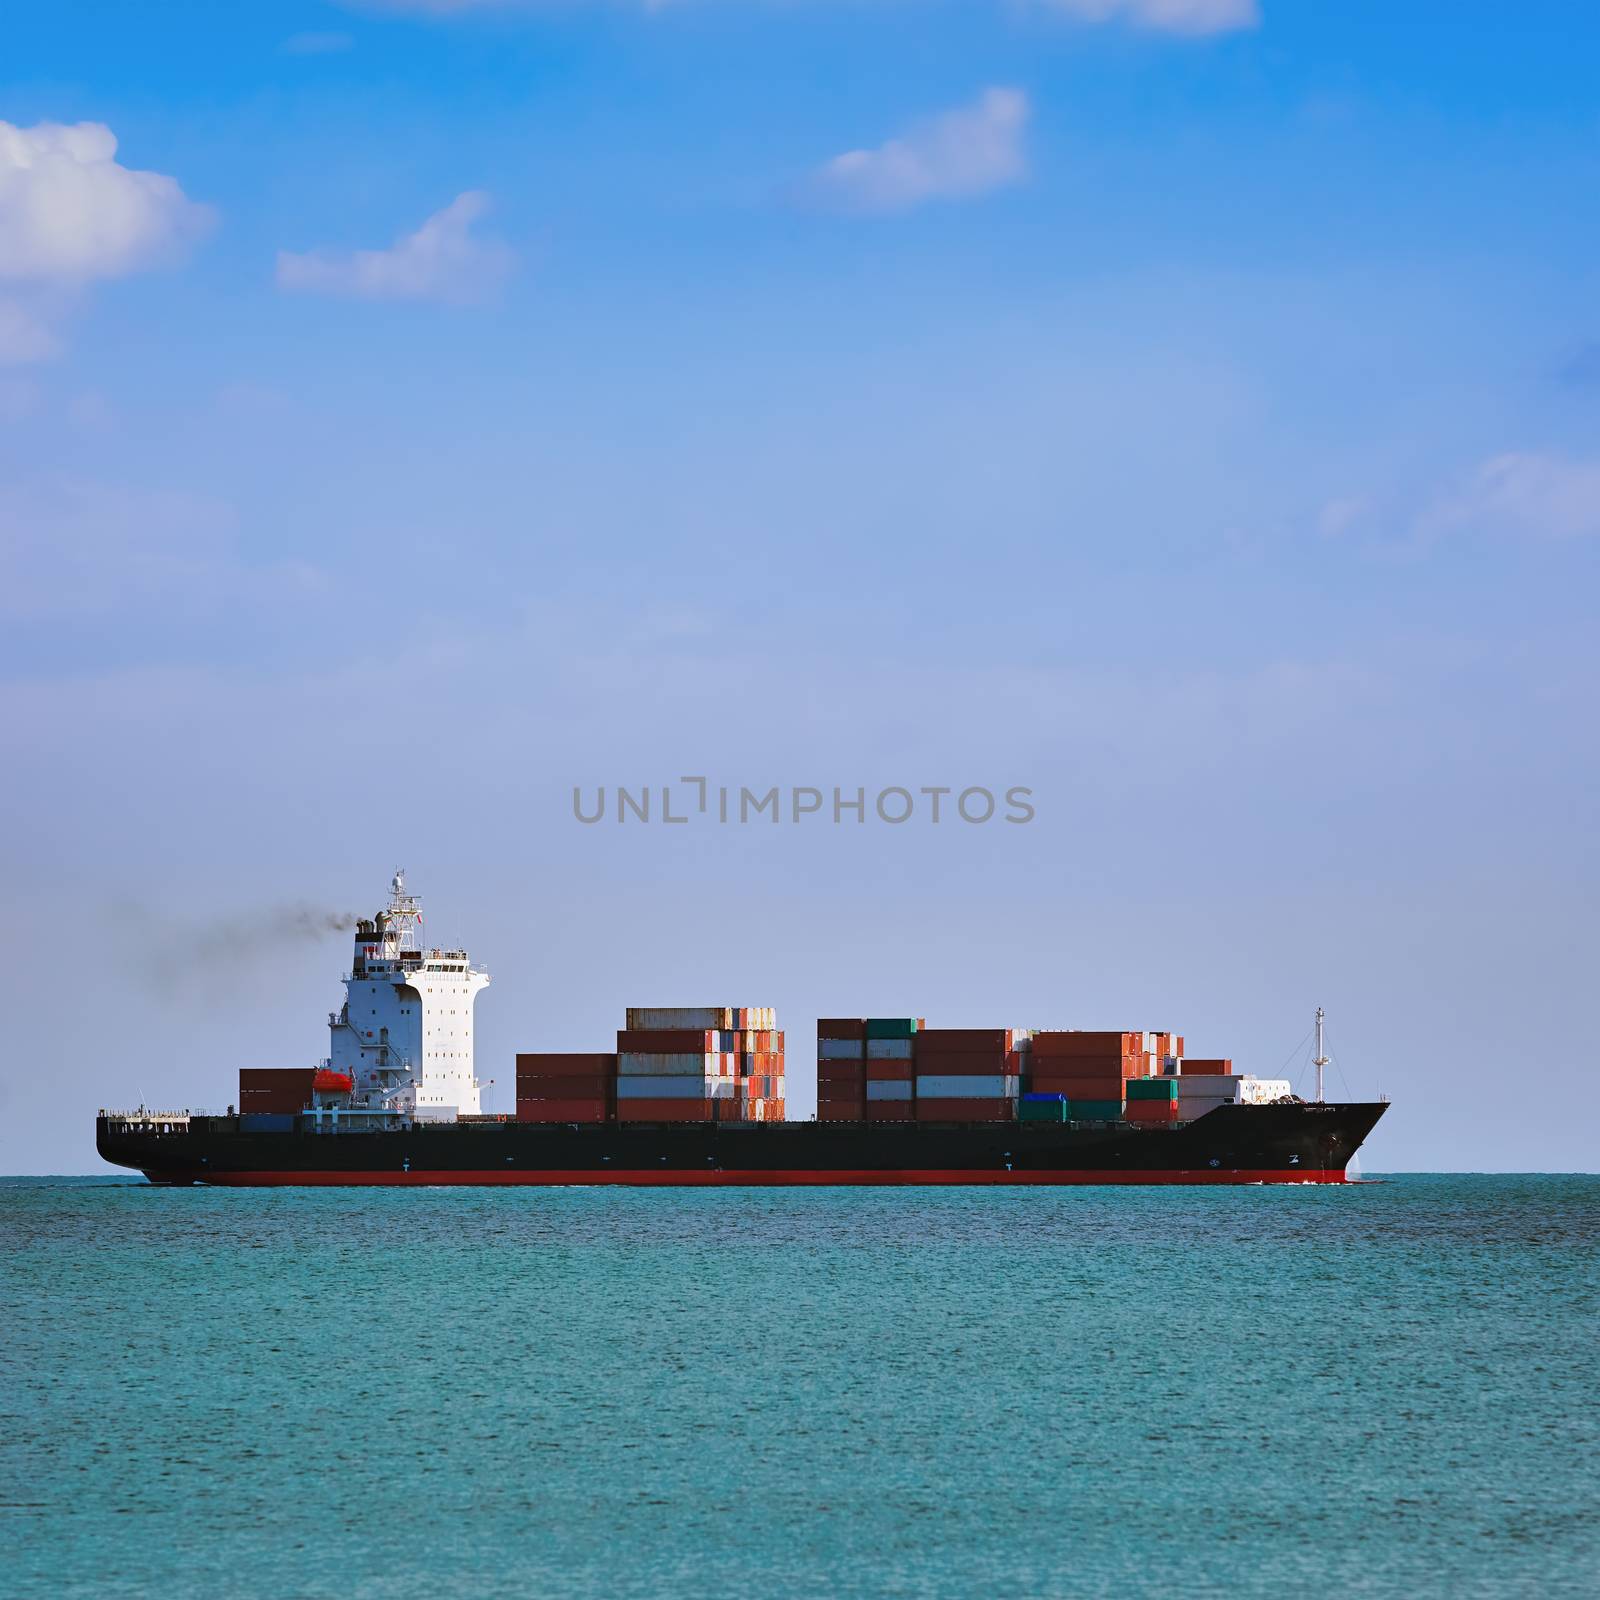 Big Container Ship in the Black Sea